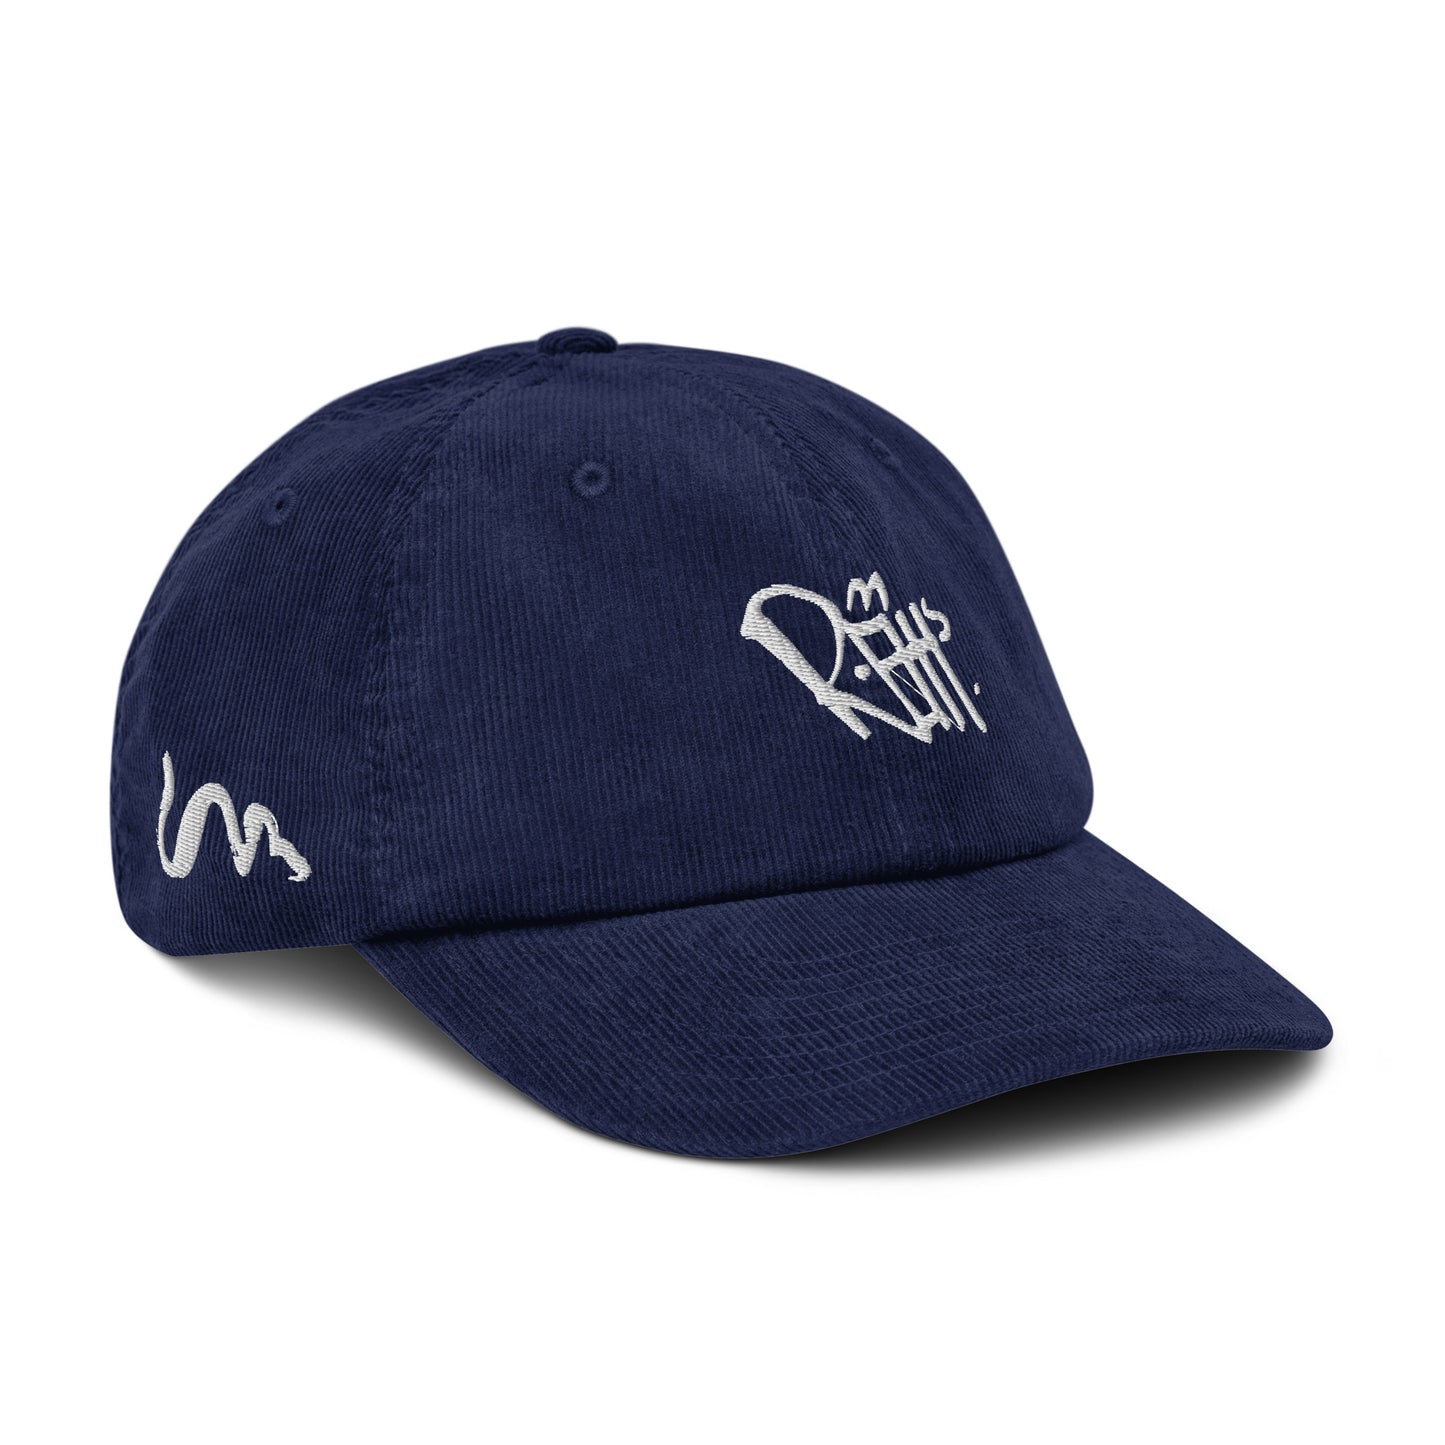 REHH - Corduroy hat (Navy)